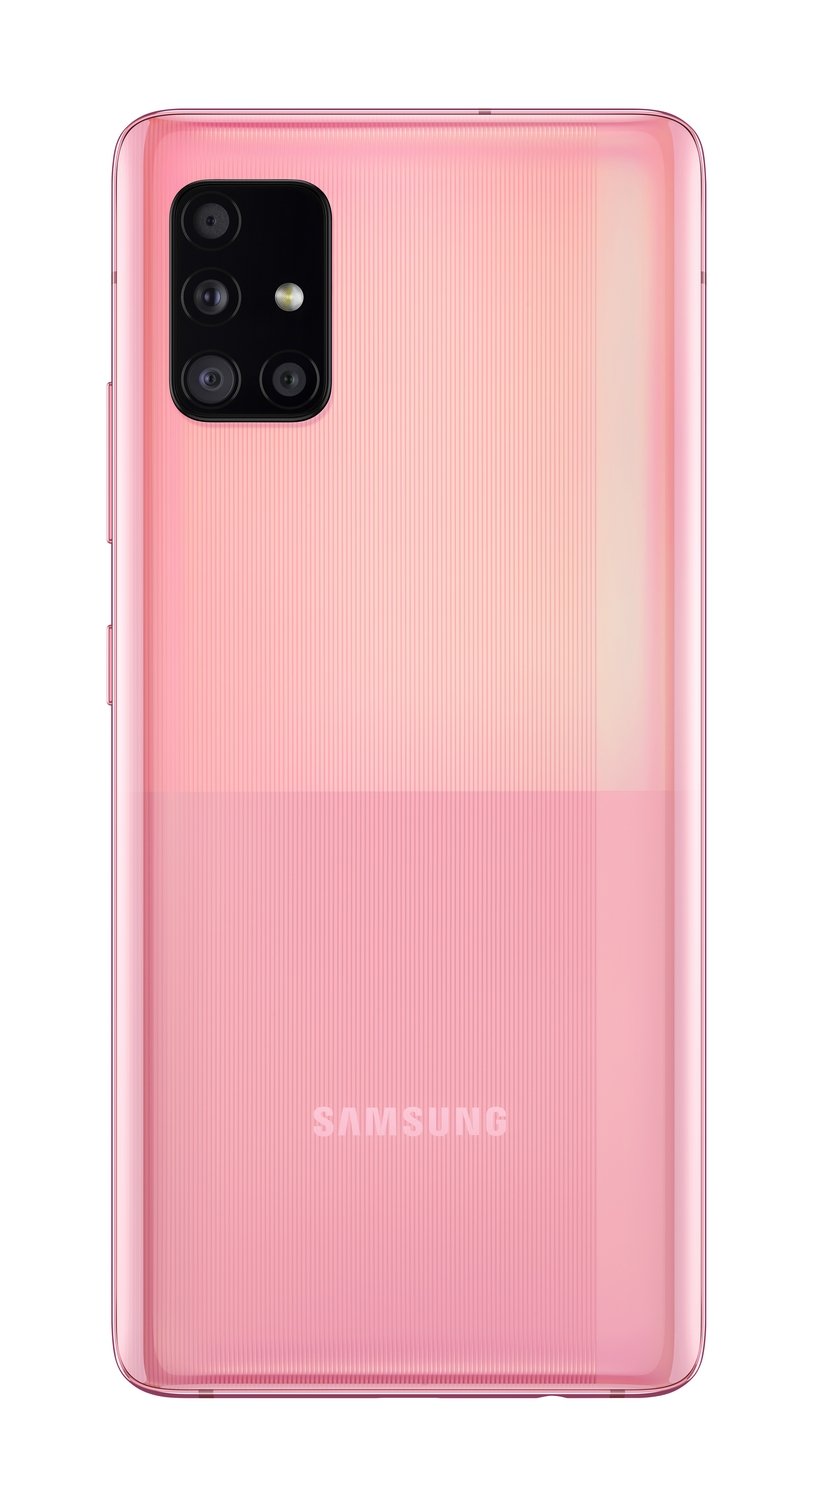 Samsung Galaxy A51 5G specs, review, release date - PhonesData